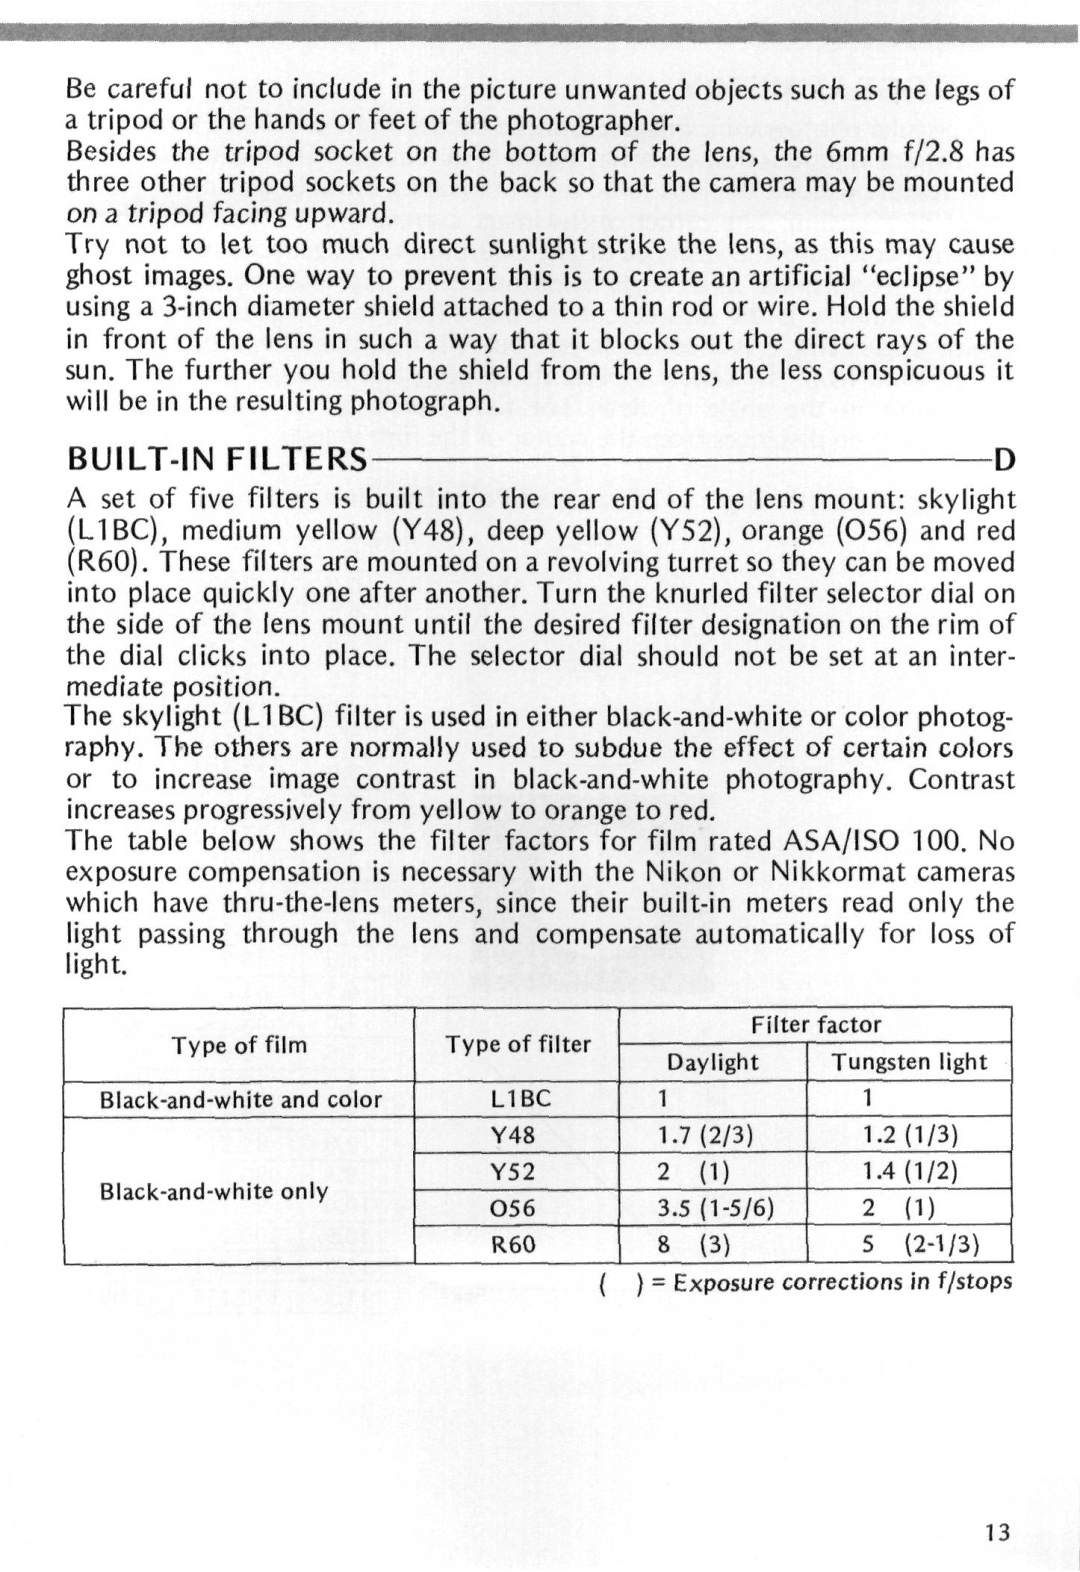 Nikon Fisheye-Nikkor 6mm f/2.8 instruction manual BUILT-IN Filters 